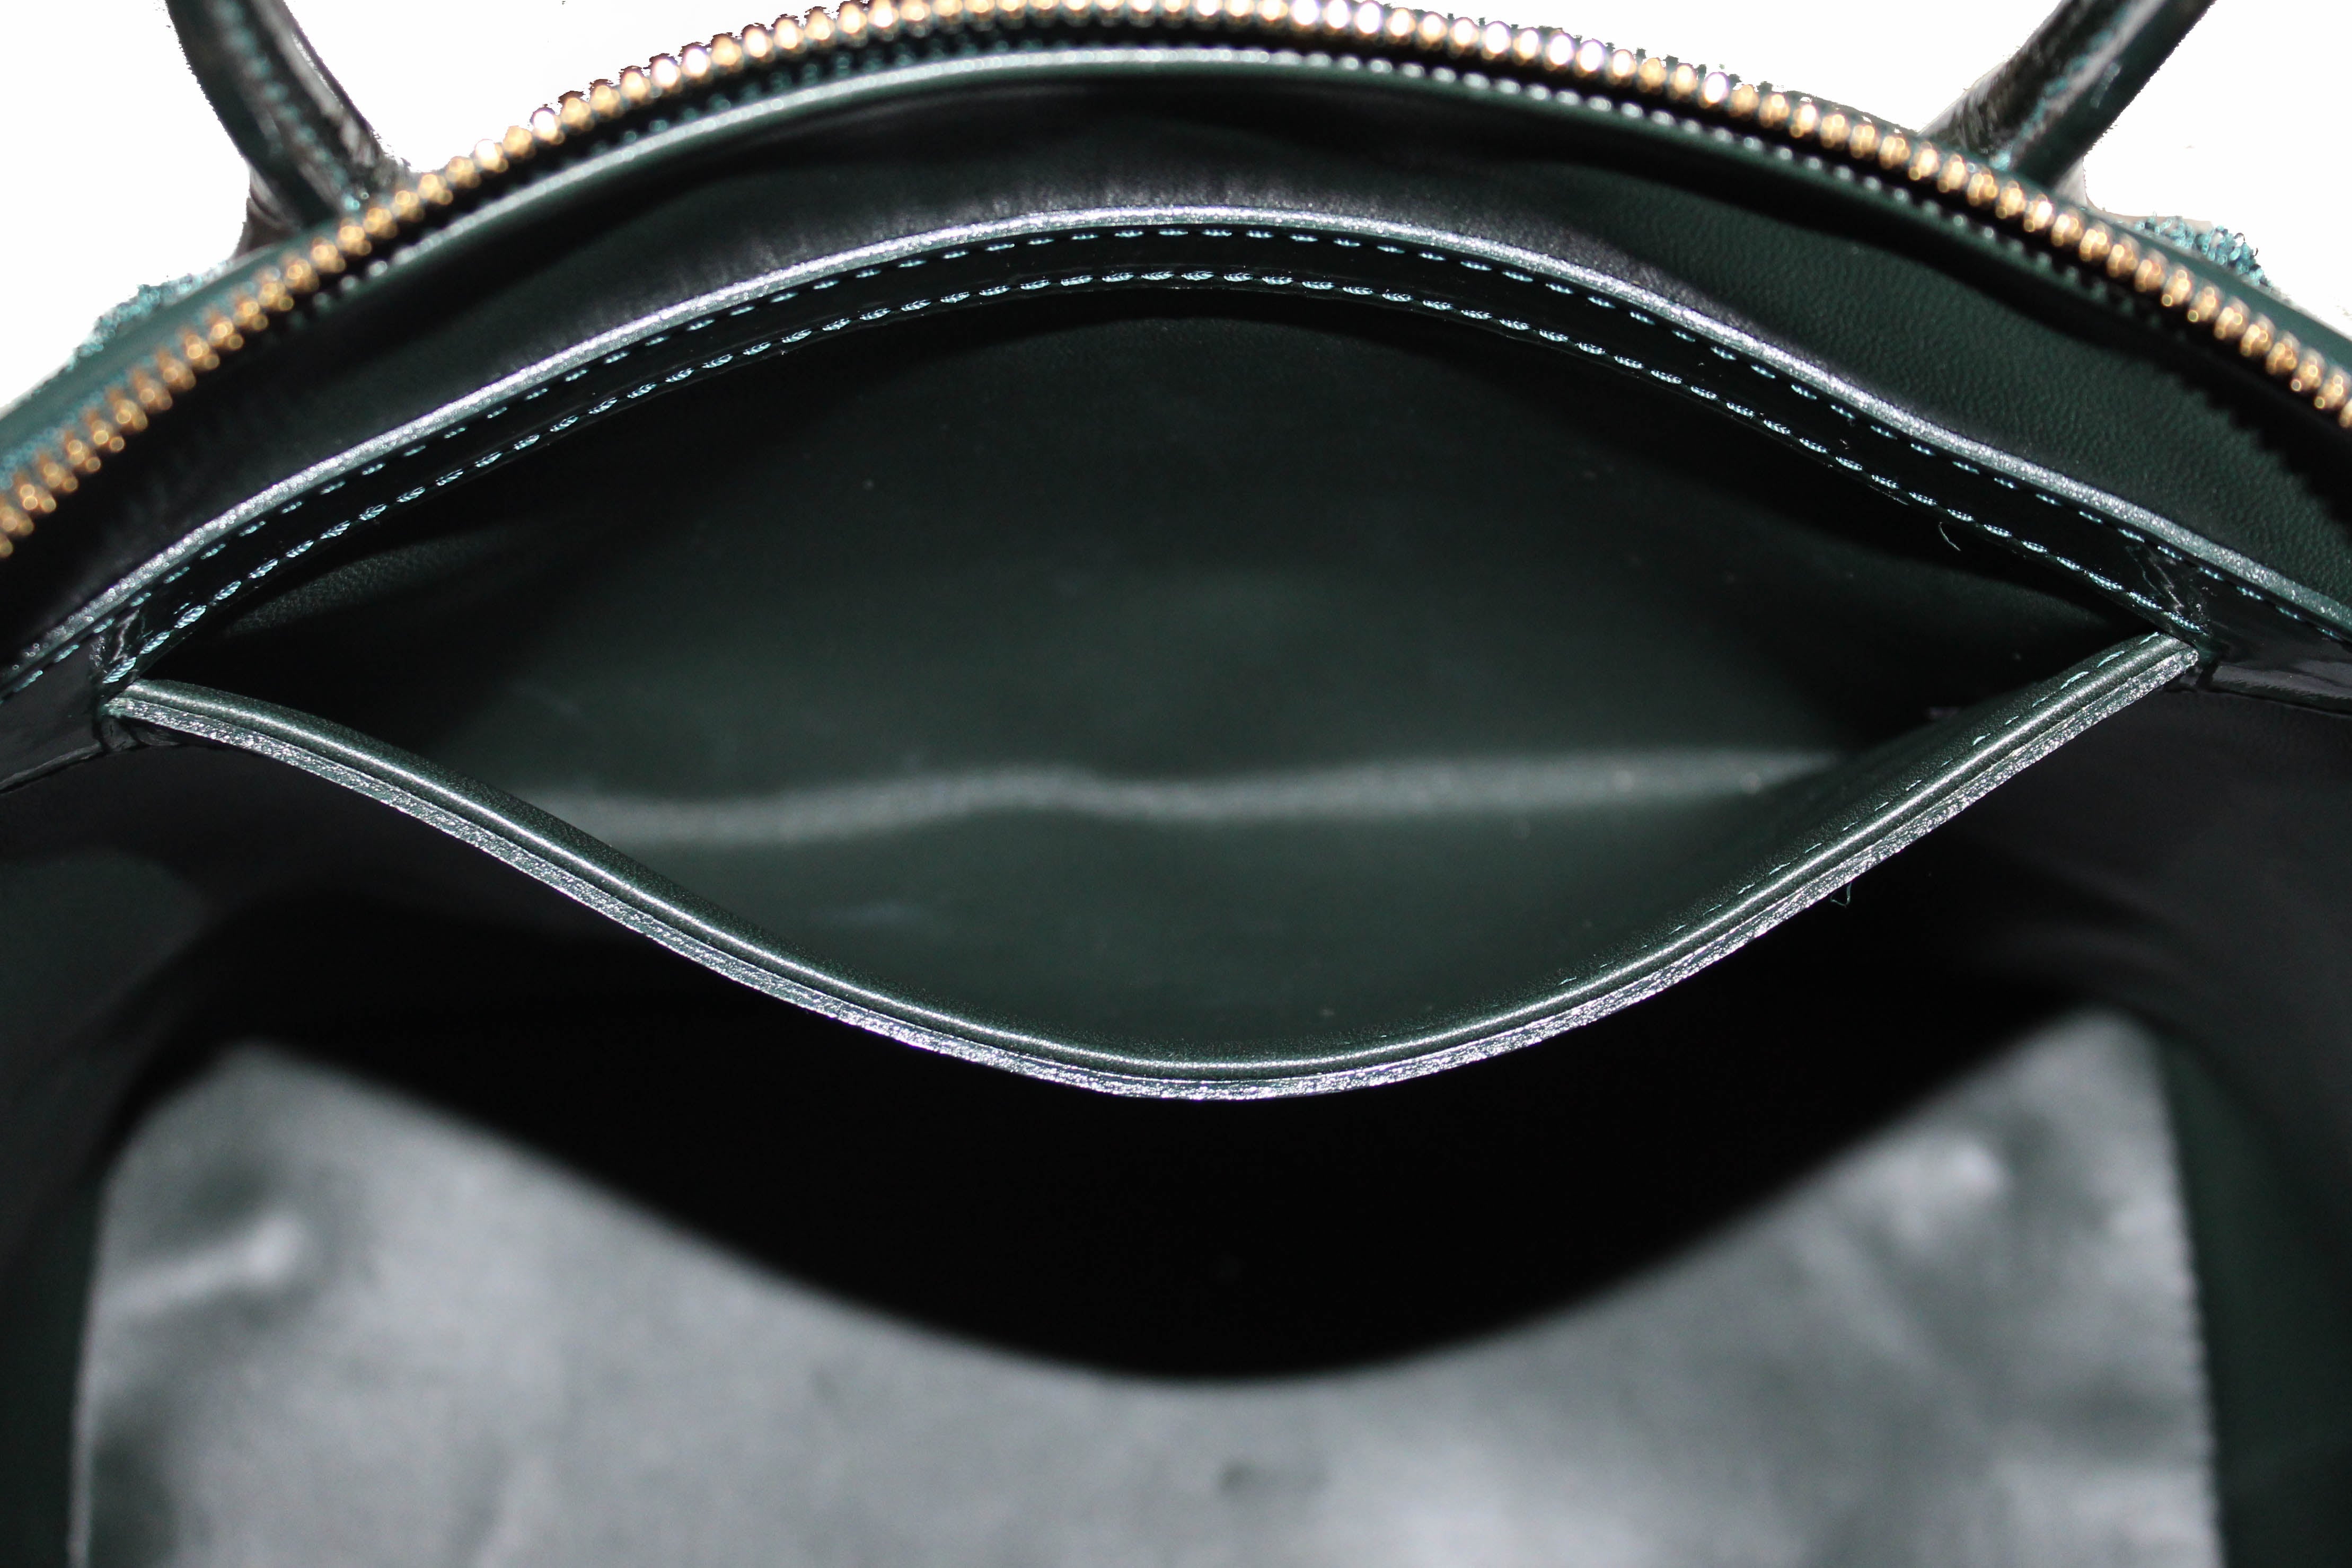 Sold at Auction: Vuitton L/E Green Monogram Fascination Lockit Bag